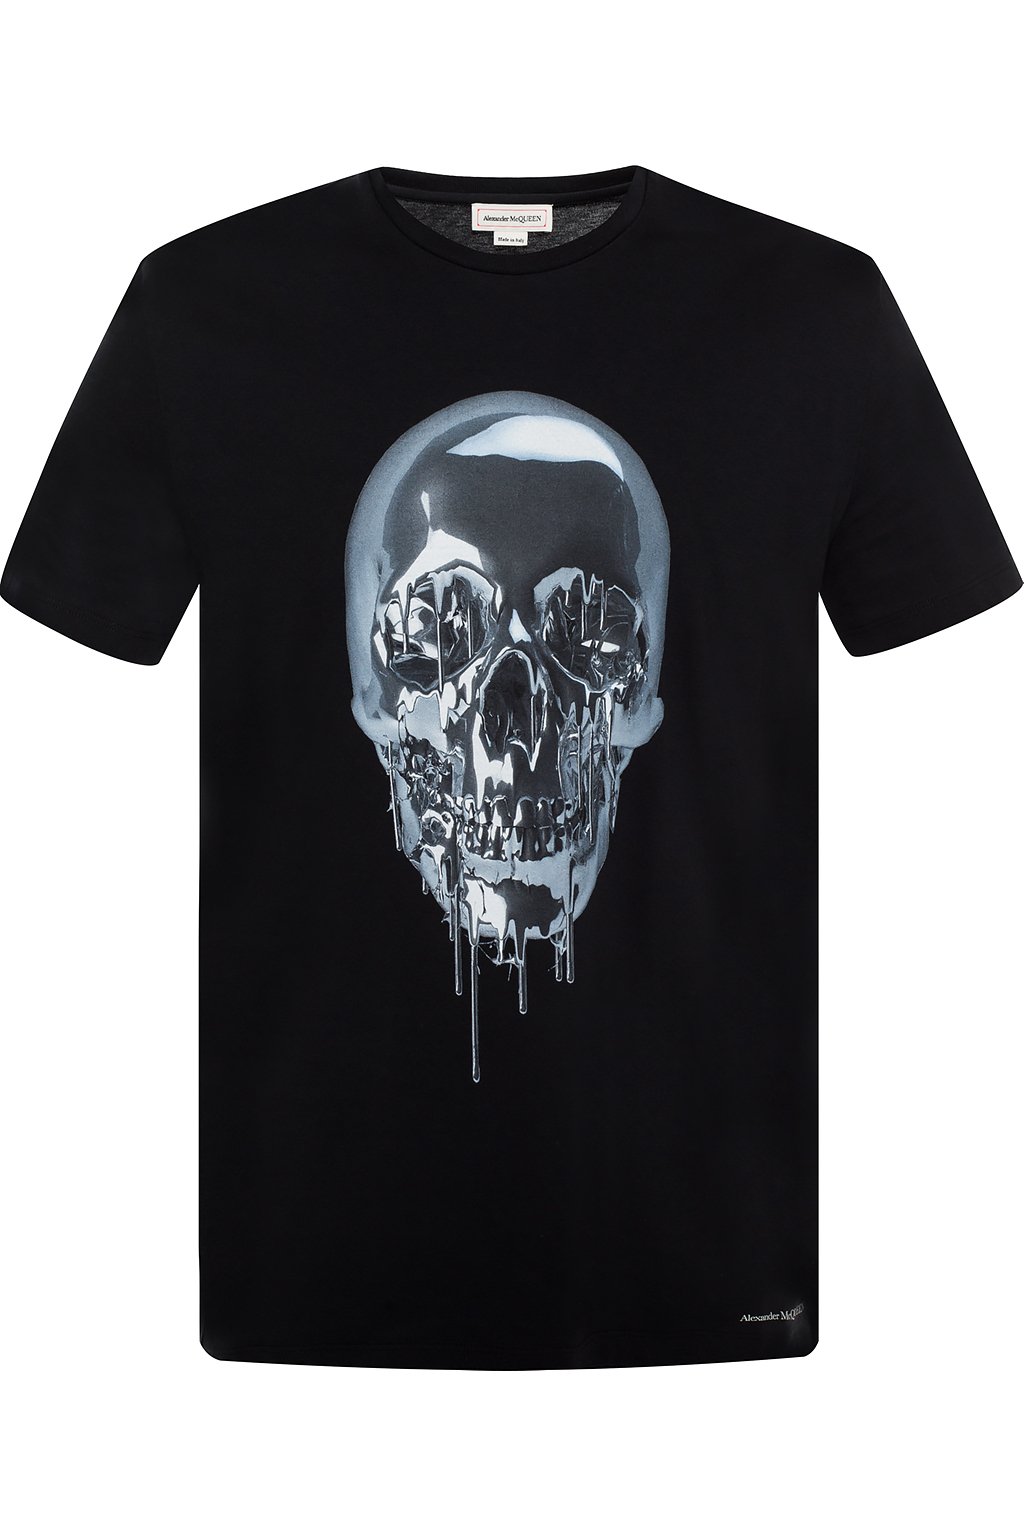 Skull motif T-shirt Alexander McQueen - Vitkac Norway